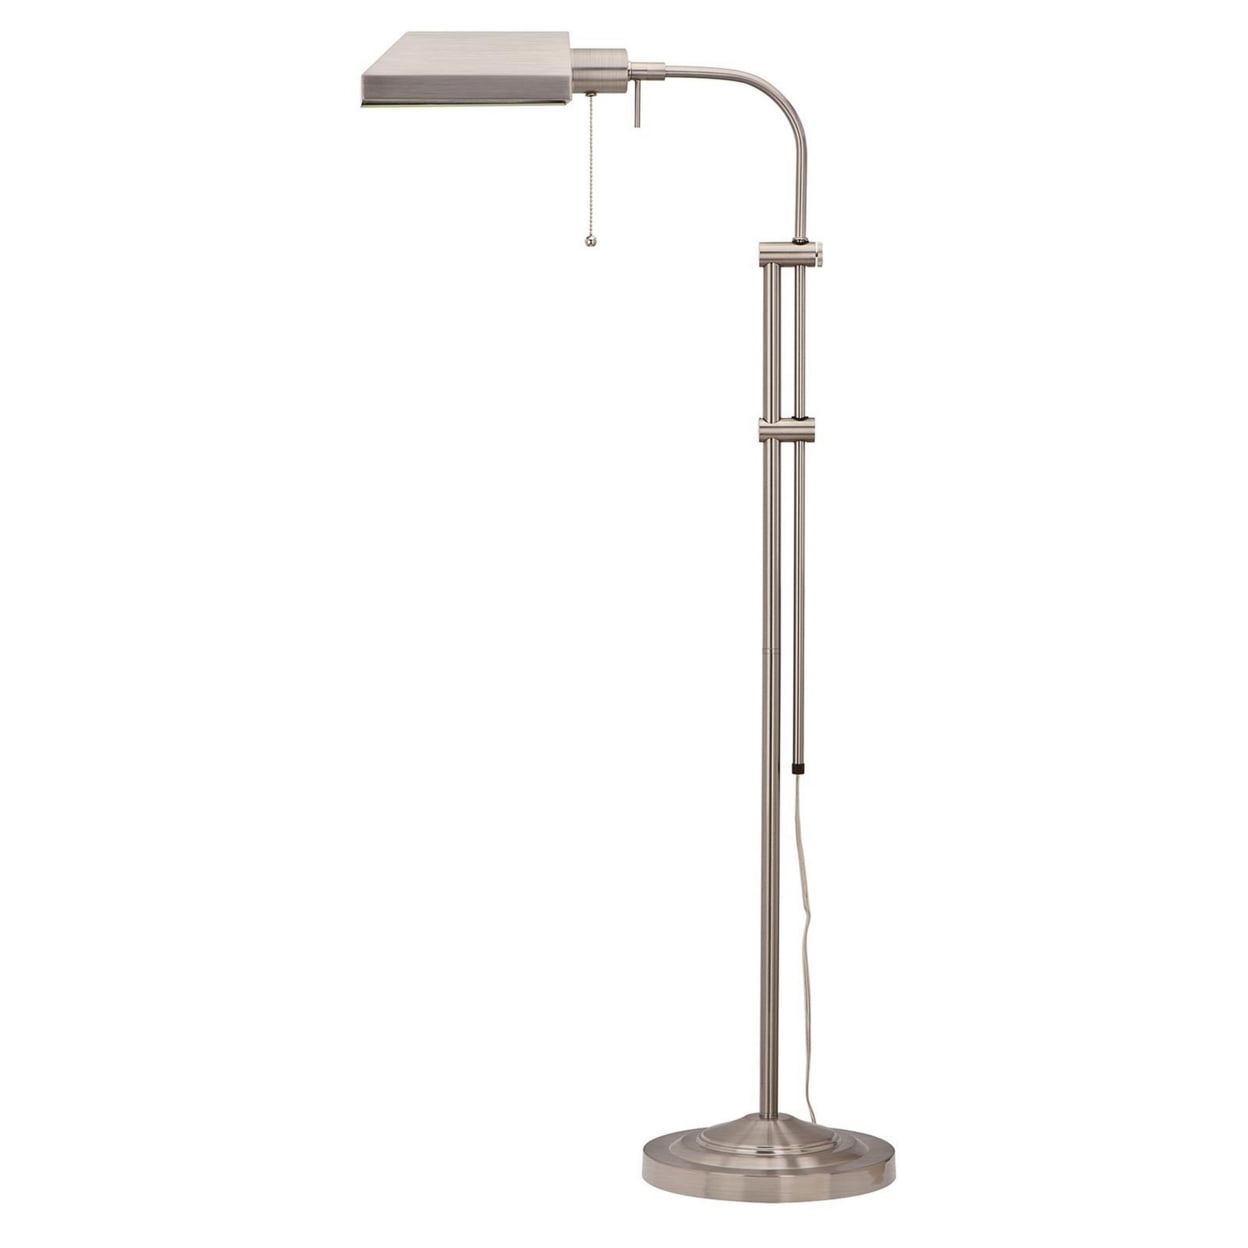 Picture of Benjara BM225080 Metal Rectangular Floor Lamp with Adjustable Pole, White